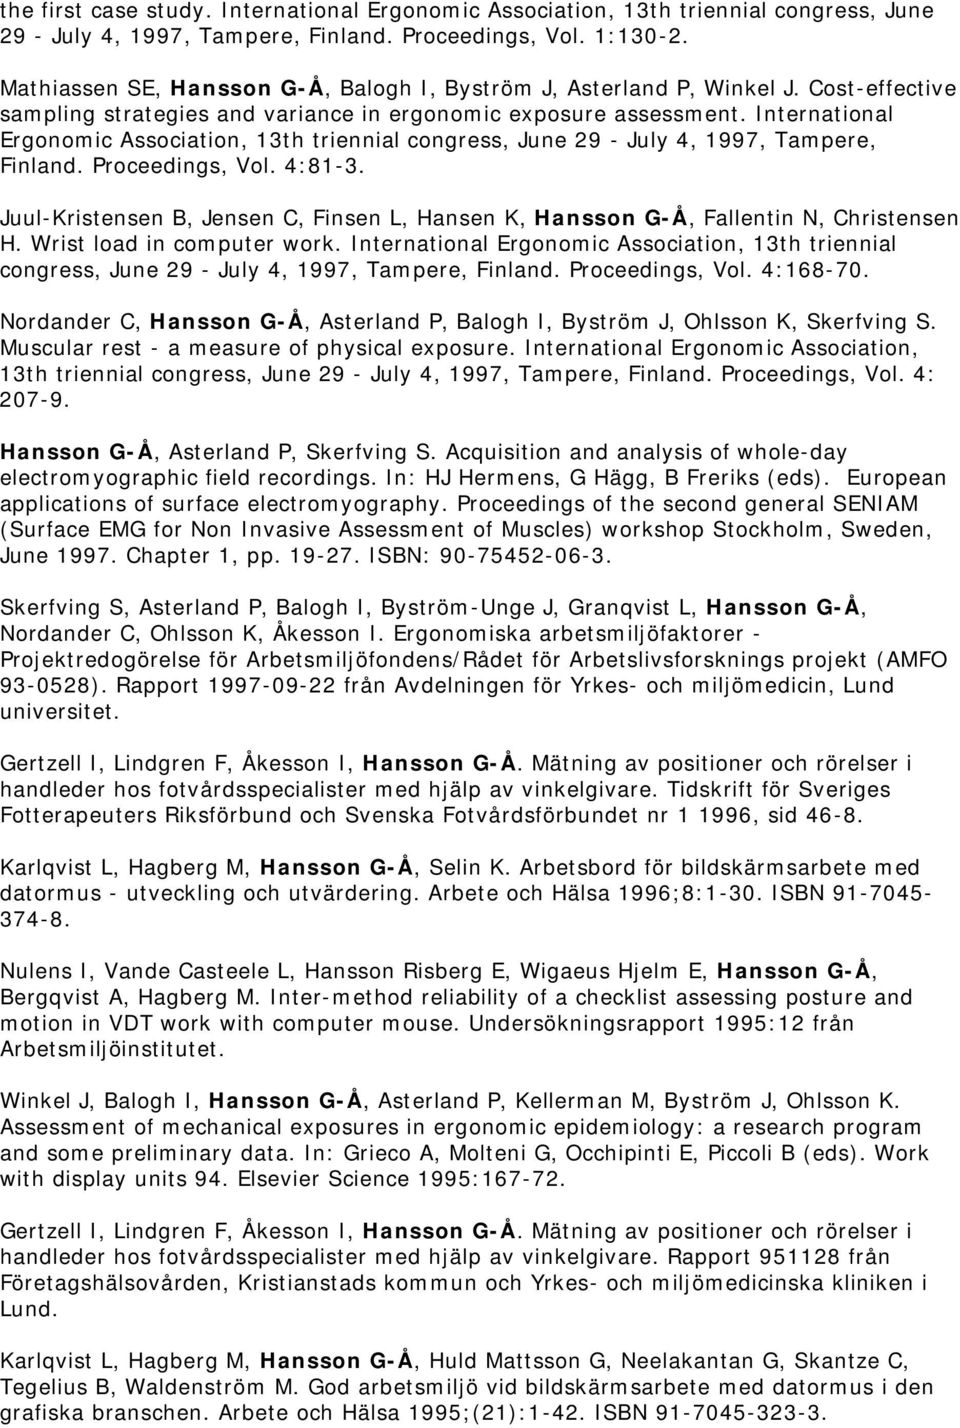 International Ergonomic Association, 13th triennial congress, June 29 - July 4, 1997, Tampere, Finland. Proceedings, Vol. 4:81-3.